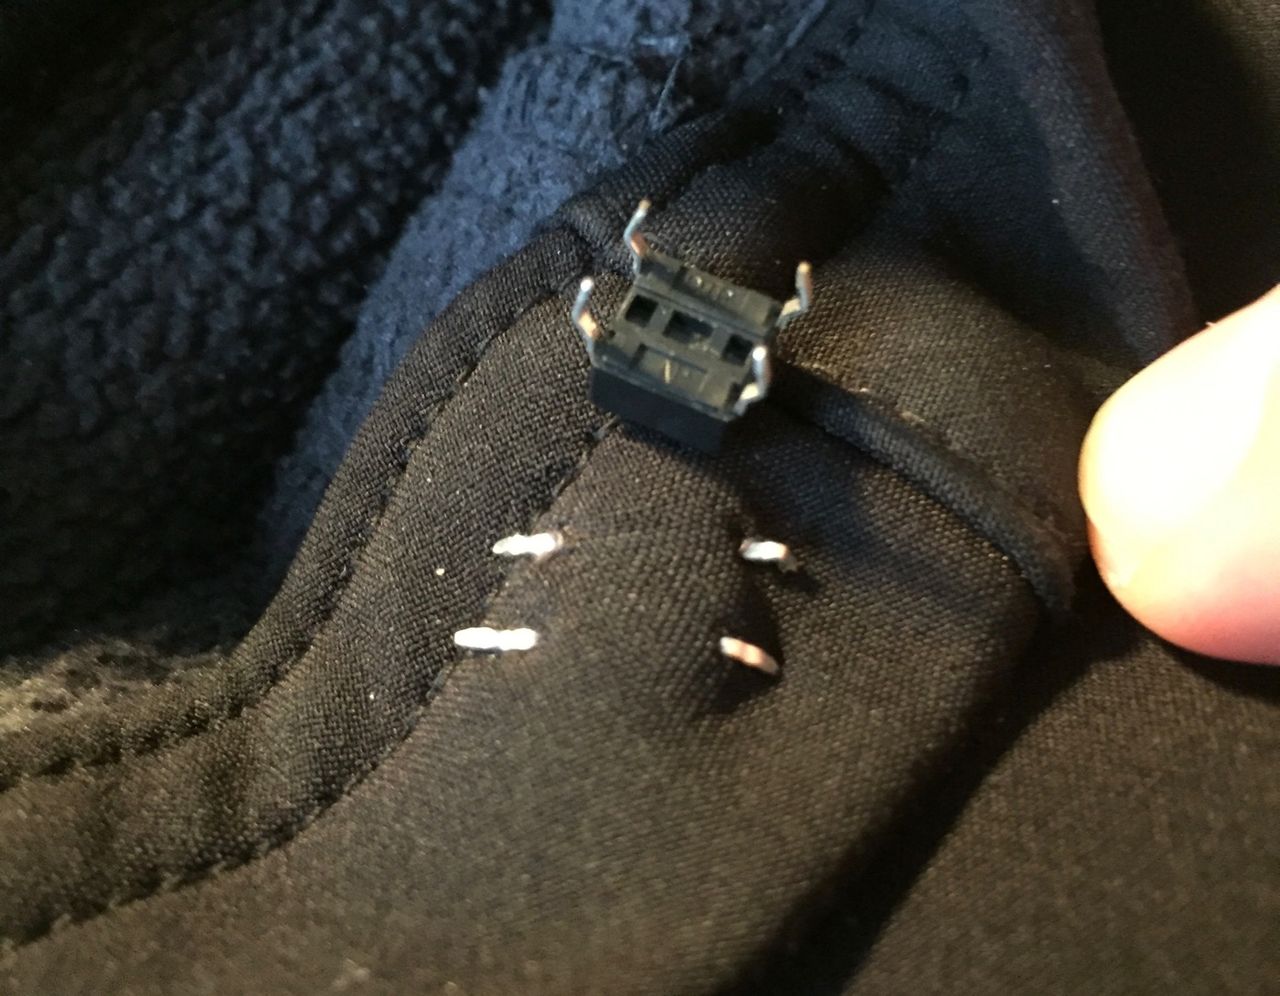 Underside of DIP switch poking through jacket material.